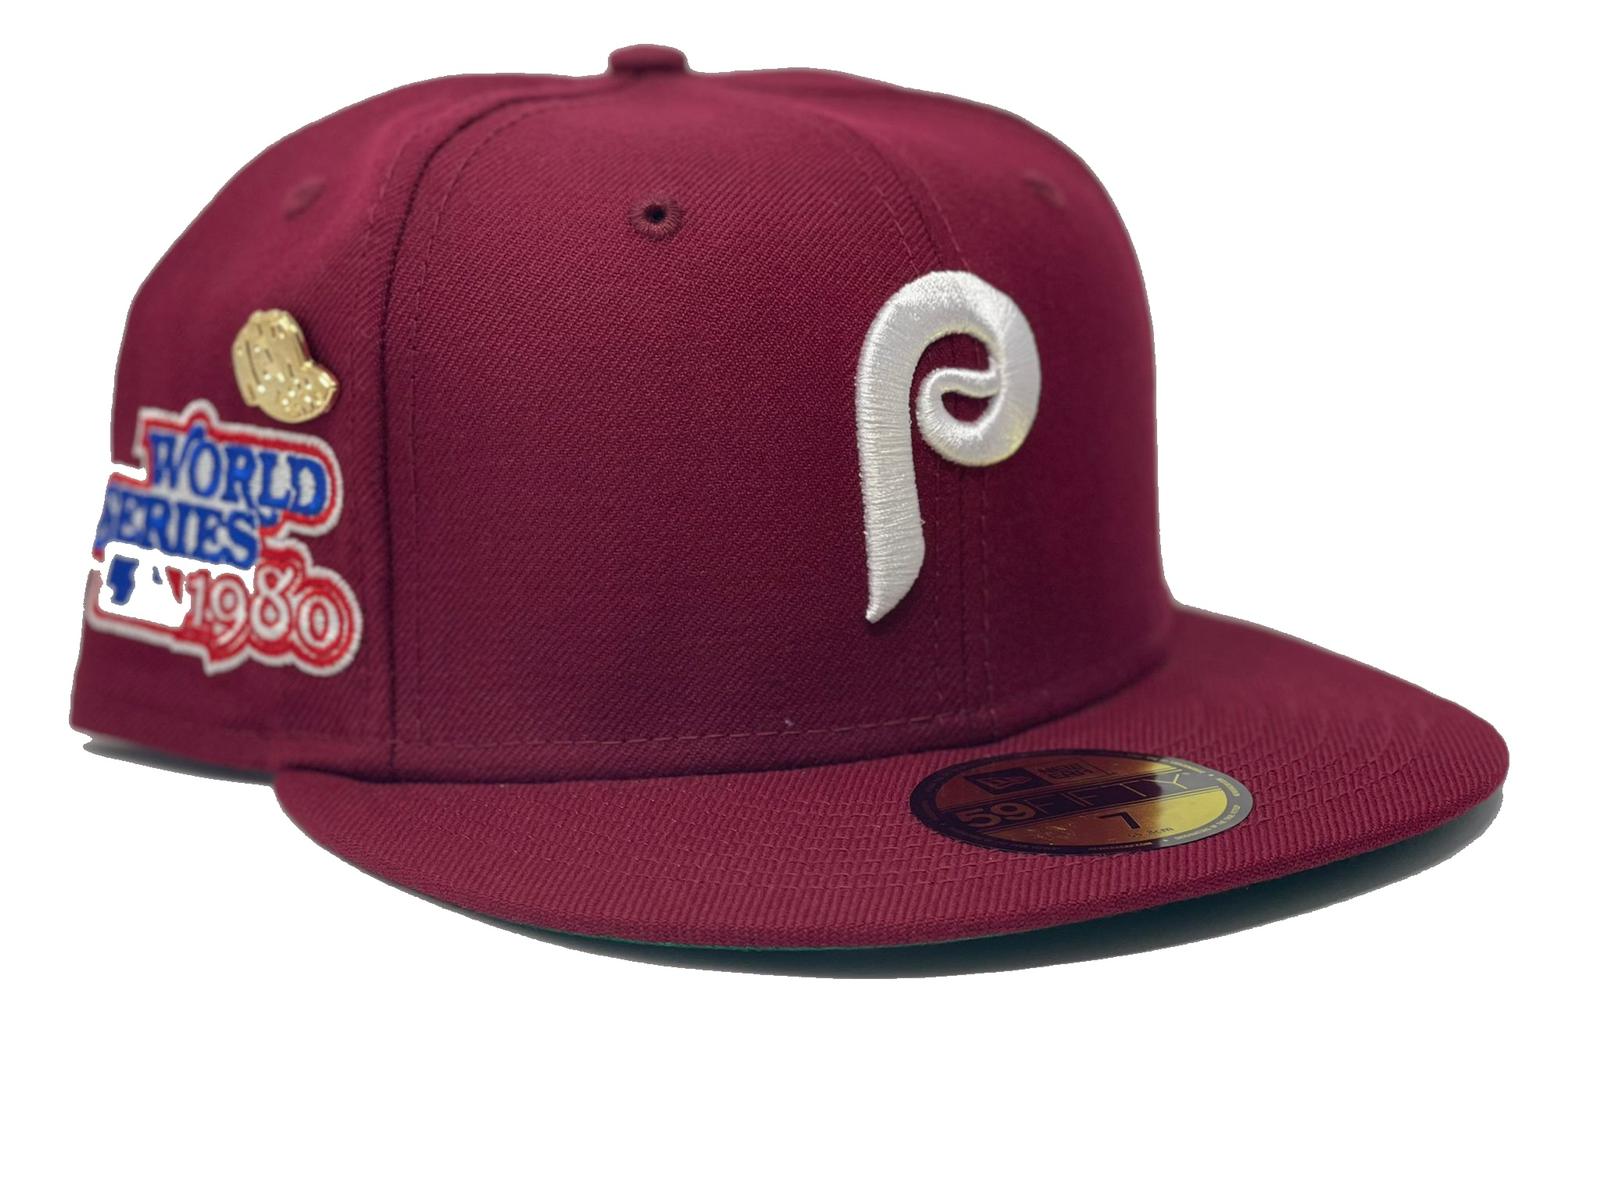 1980 Philadelphia Phillies World Series New Era MLB Fitted Hat